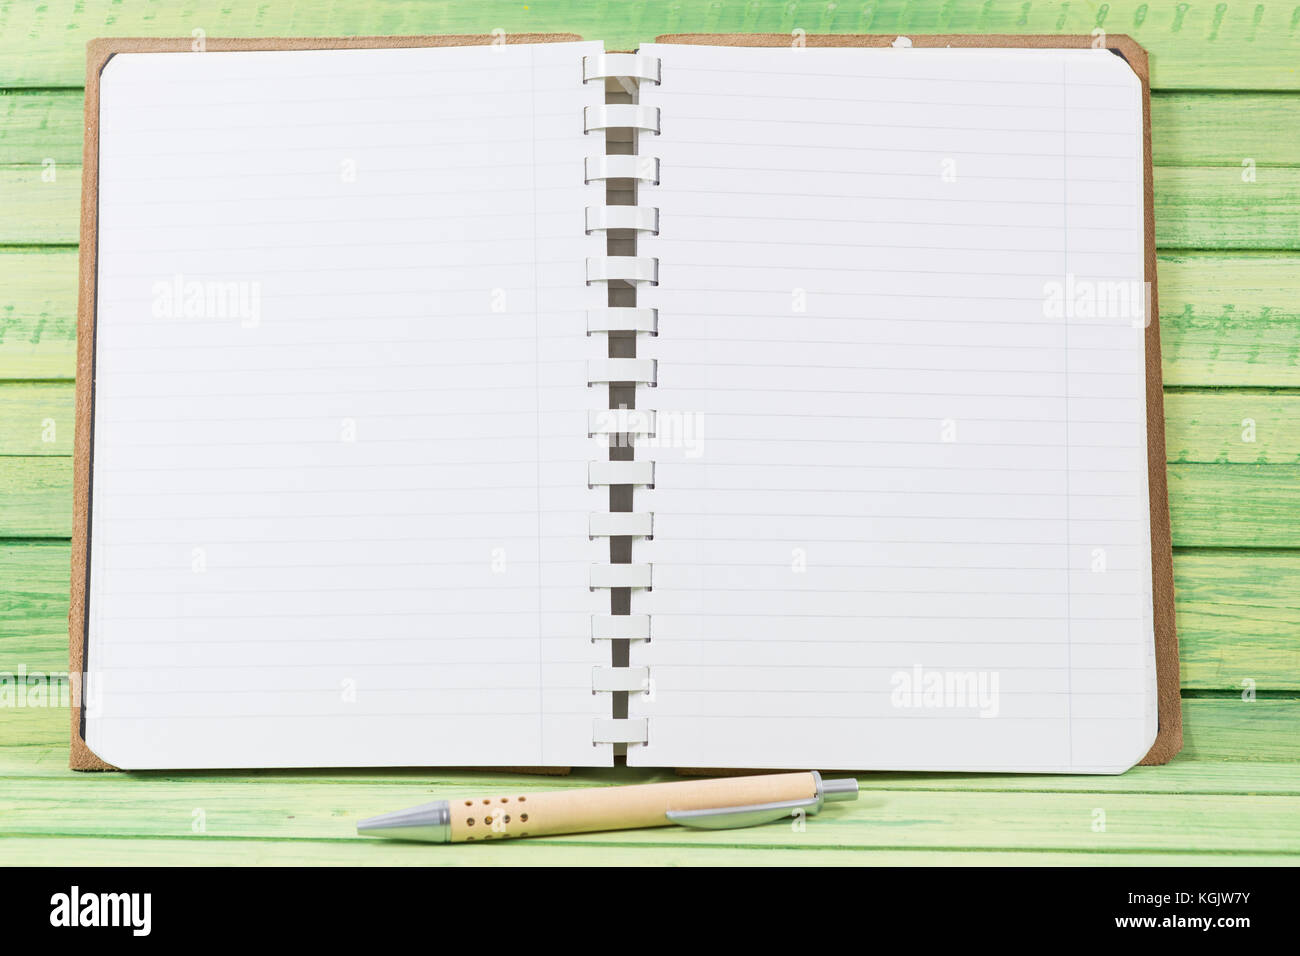 https://c8.alamy.com/comp/KGJW7Y/open-blank-notebook-with-pen-on-wooden-board-as-diary-or-journal-concept-KGJW7Y.jpg